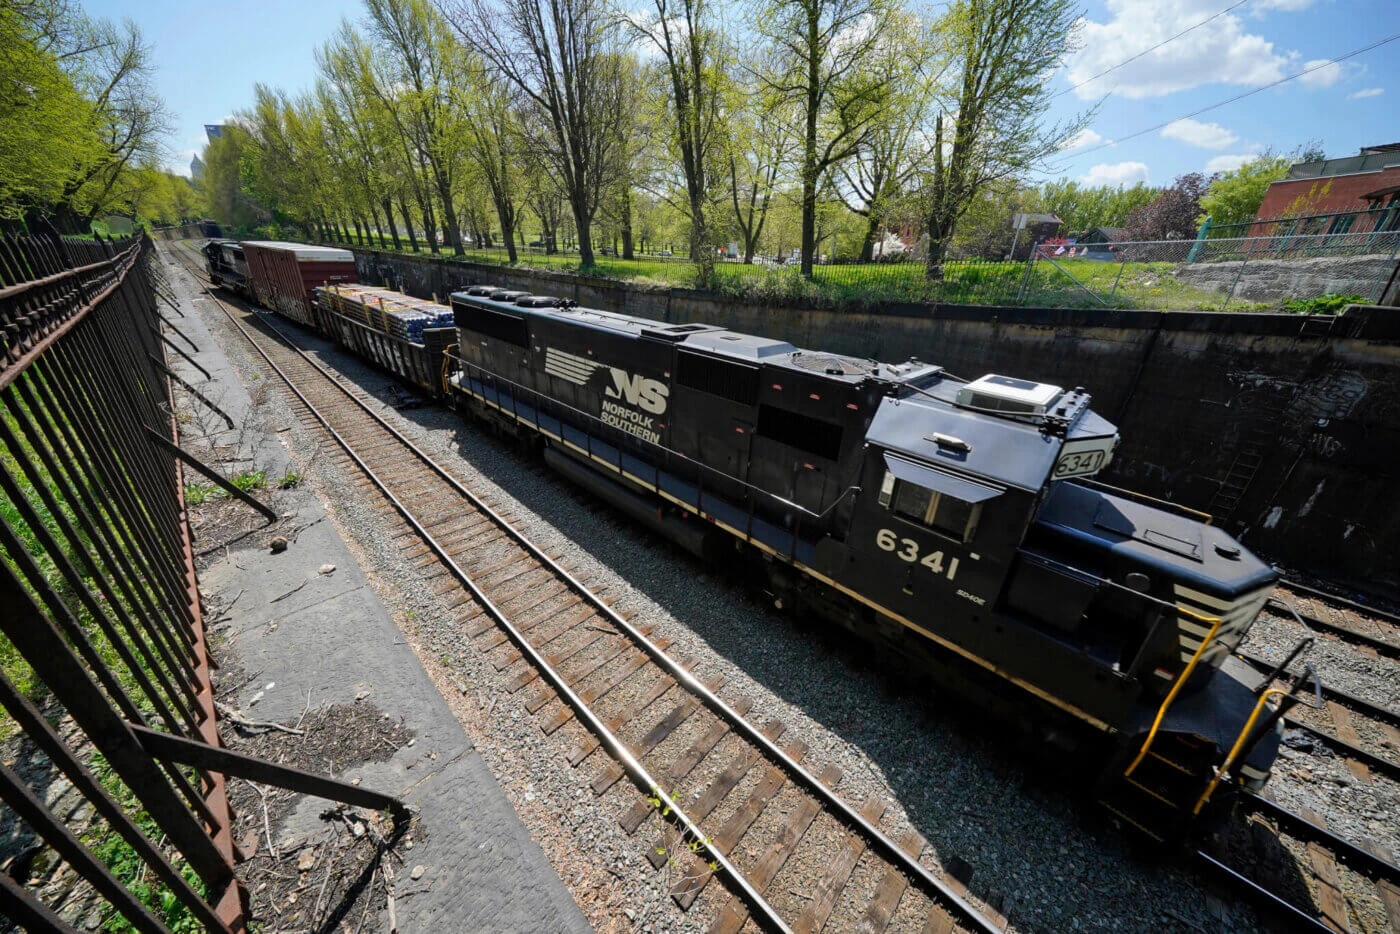 A Norfolk and Southern locomotive runs through the Northside of Pittsburgh on Monday, April 19, 2021. (AP Photo/Gene J. Puskar)